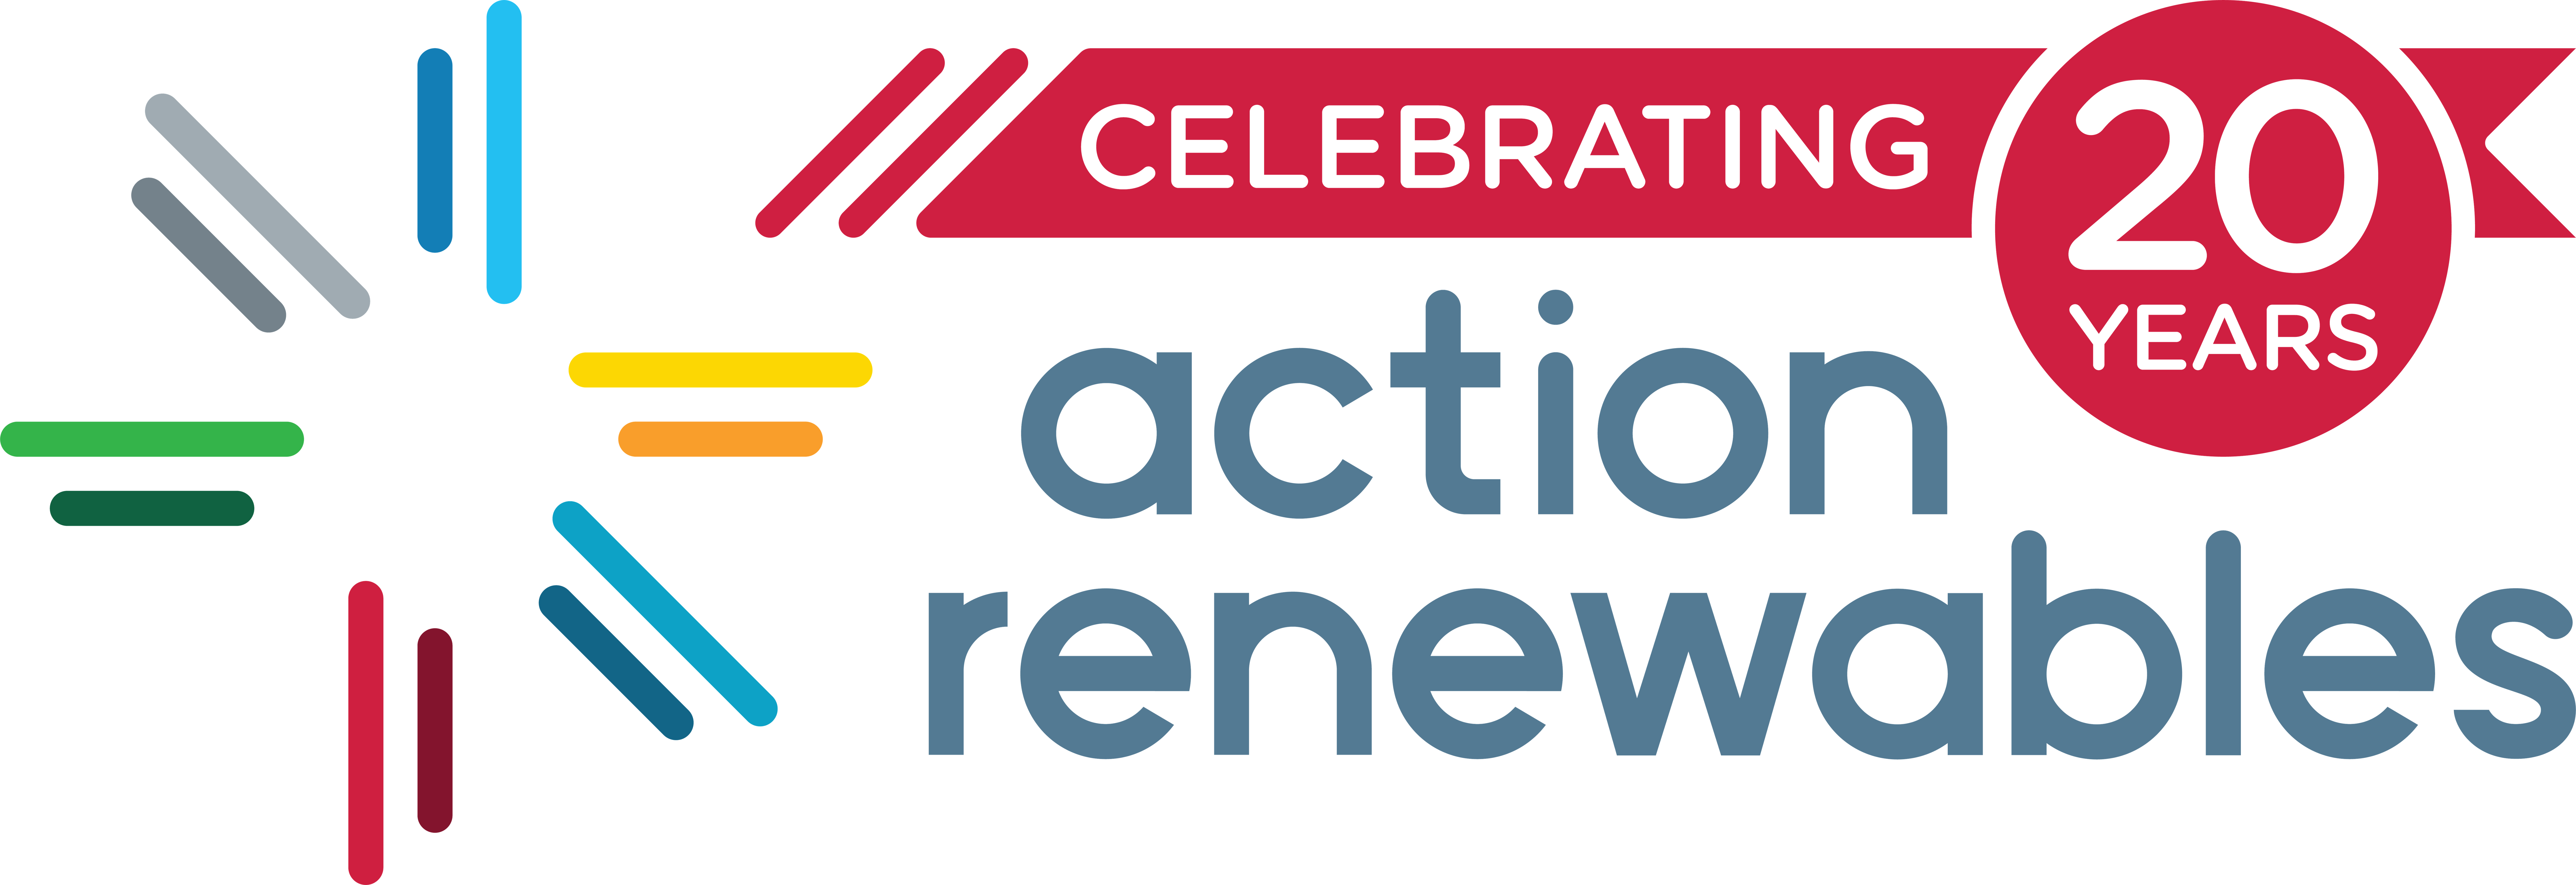 Action Renewables logo marking 20 years